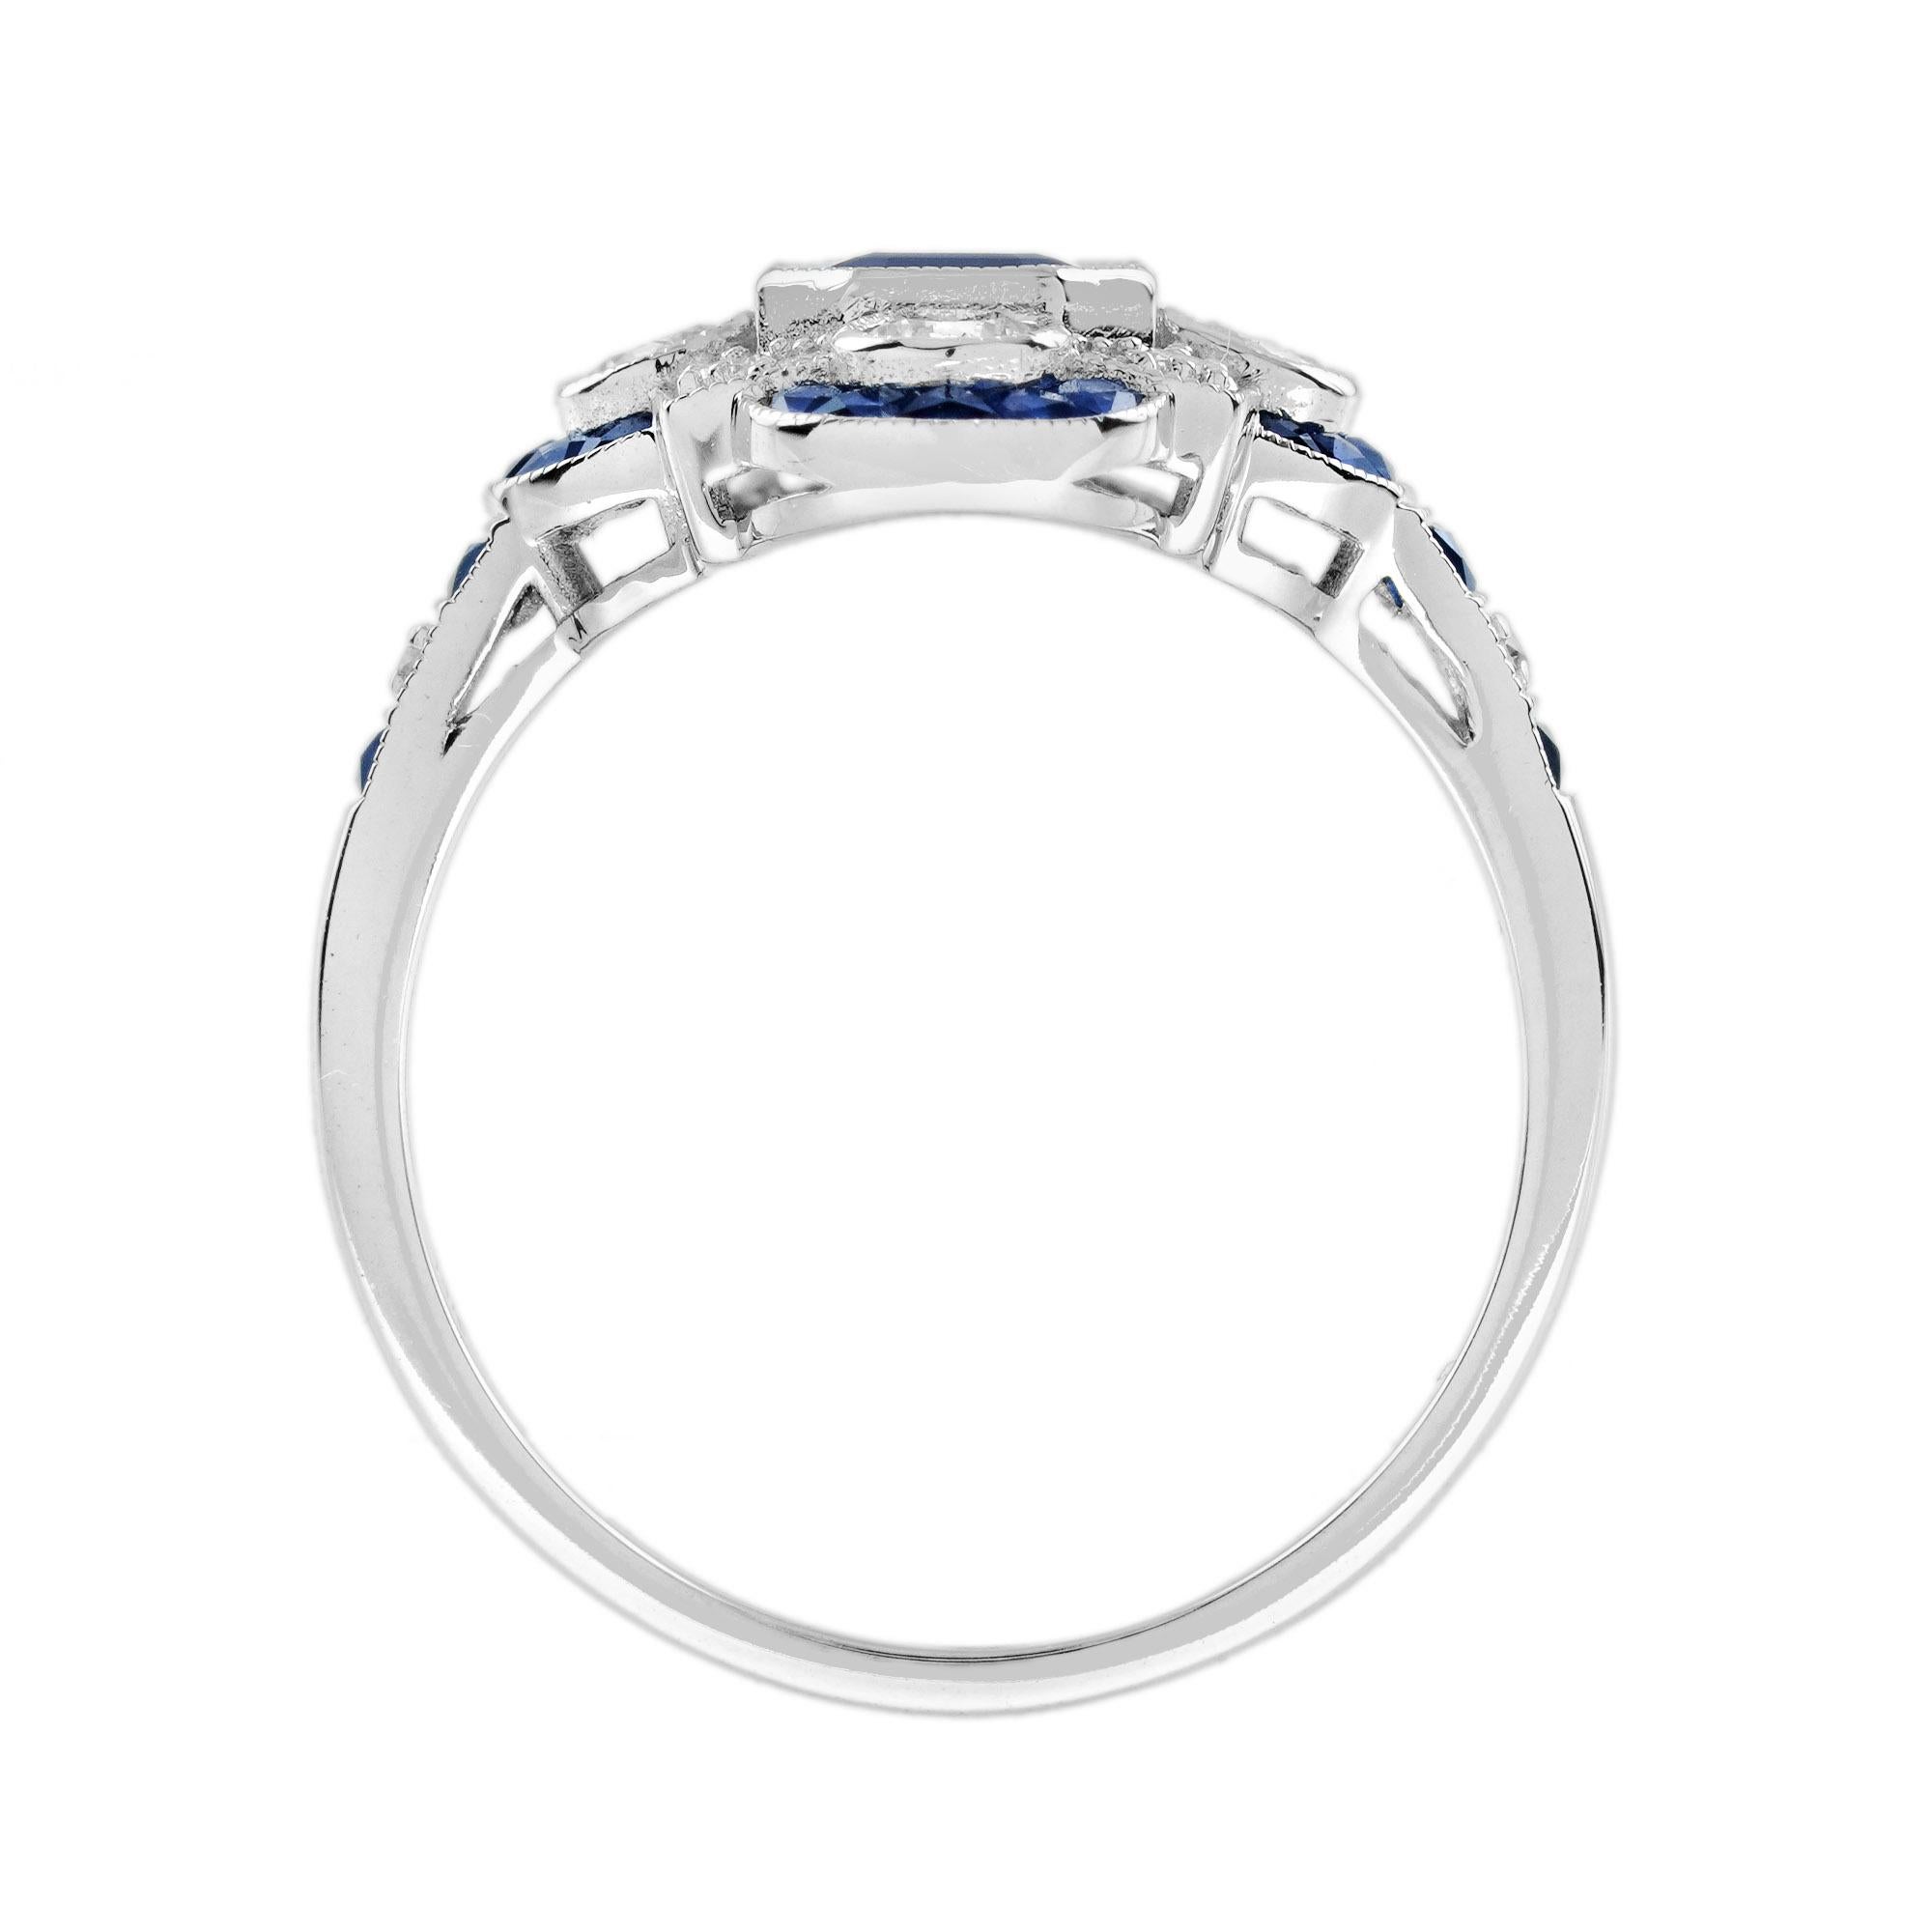 Emerald Cut Ceylon Sapphire and Diamond Art Deco Style Halo Ring in 18K Gold 5